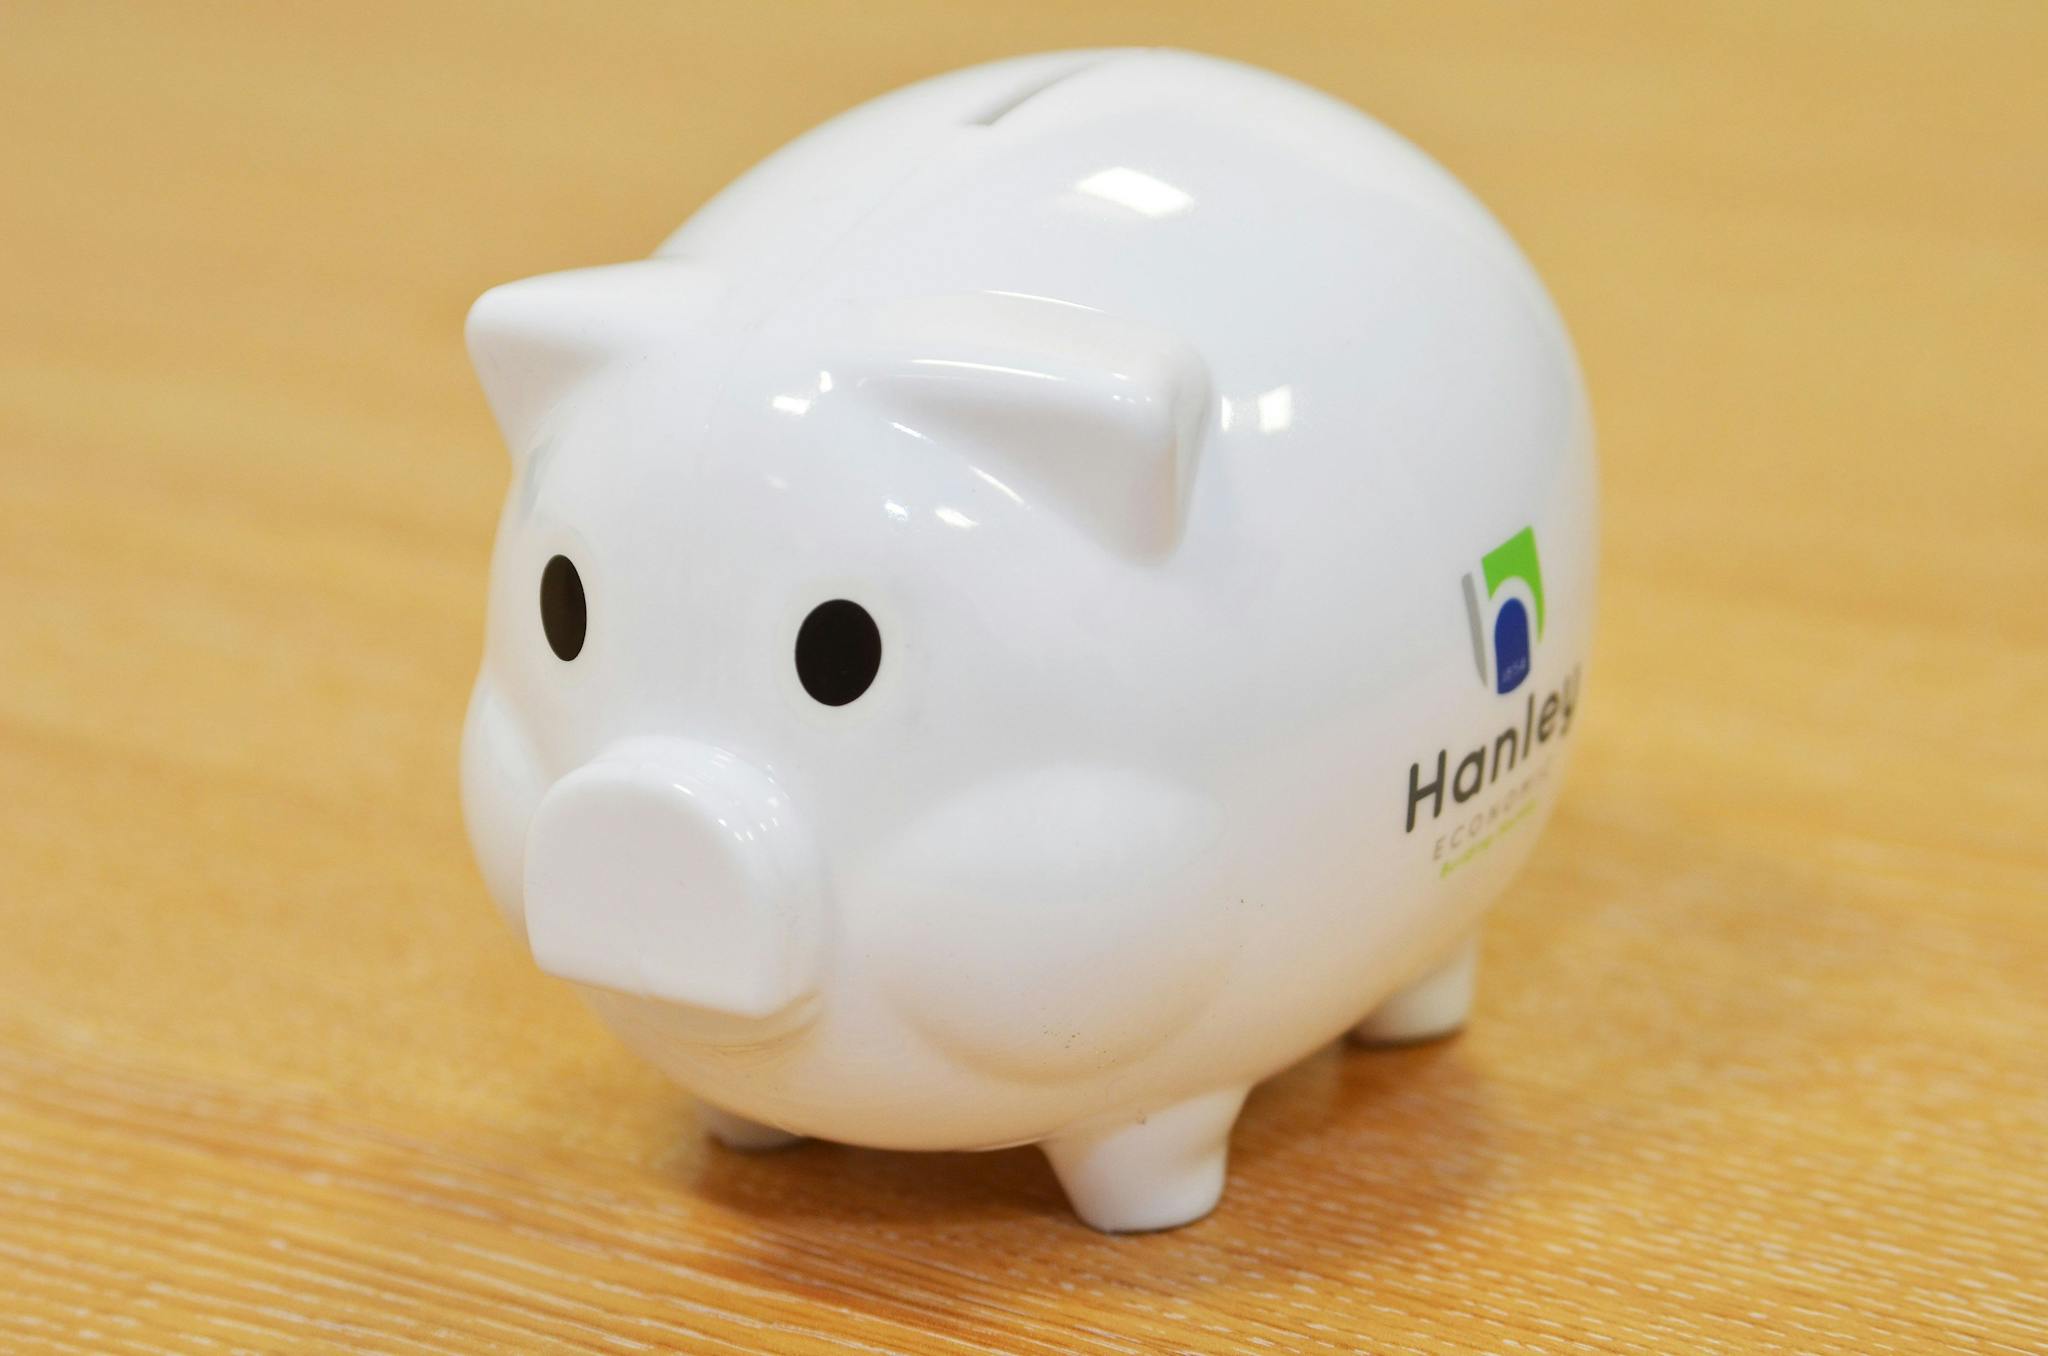 Hanley Economic Piggy Bank image